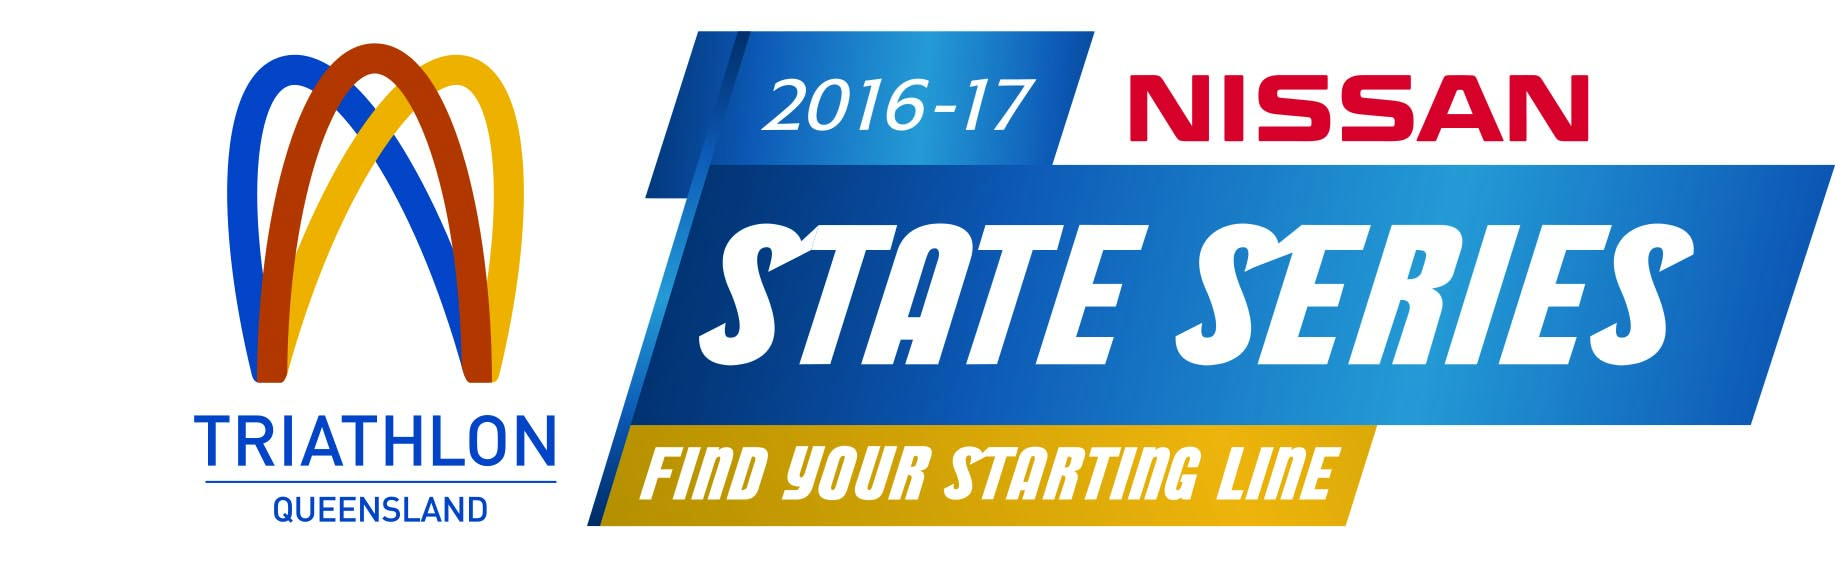 Nissan State Series logo